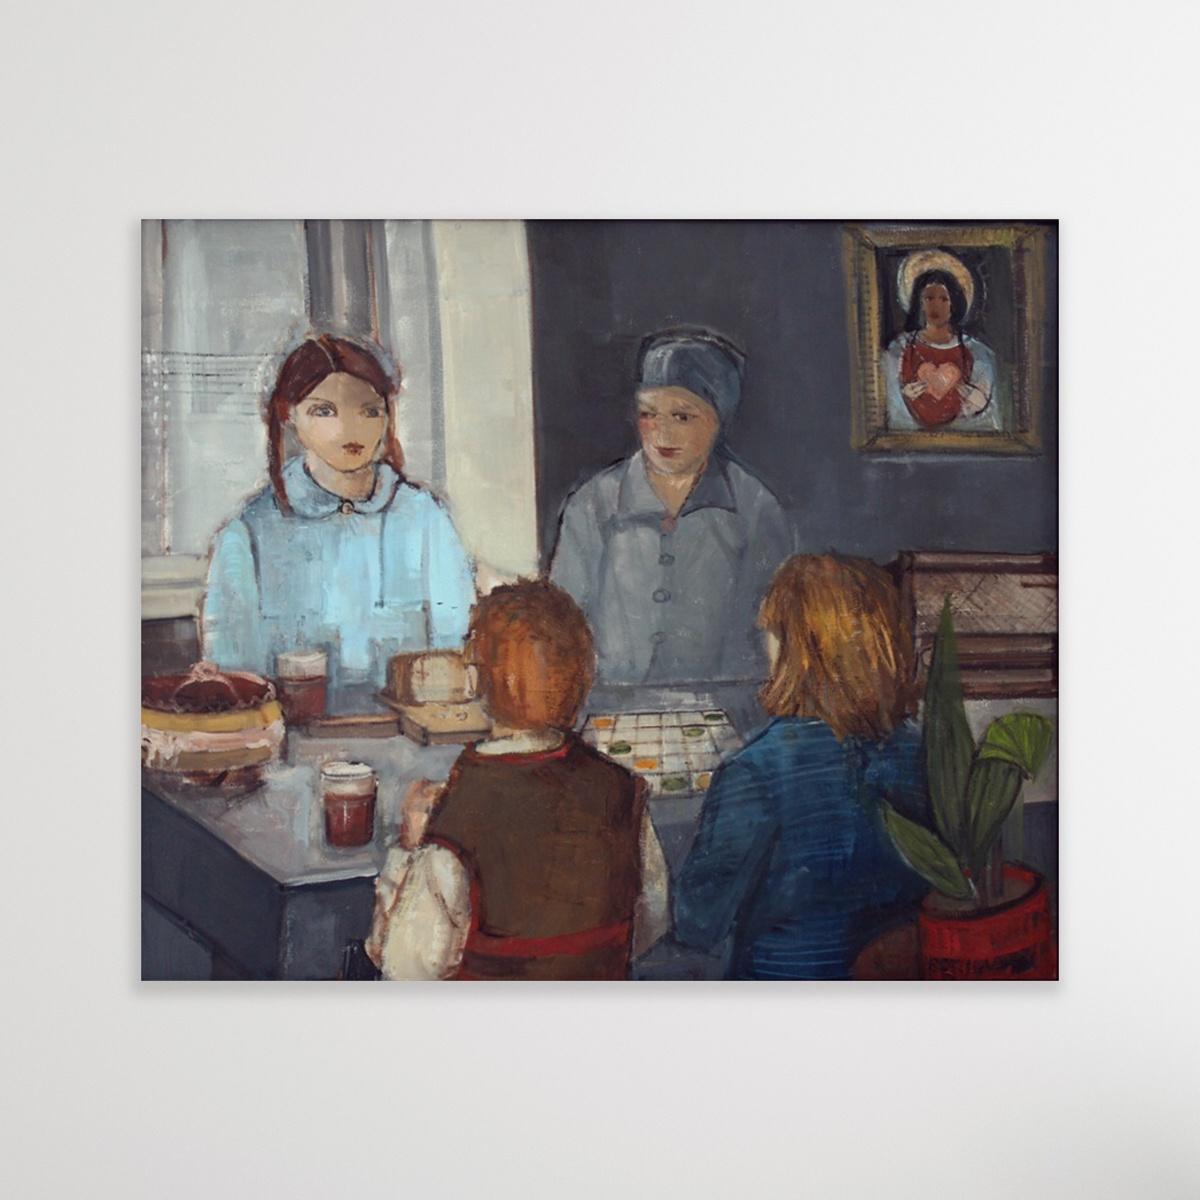 Players - XXI Century, Contemporary Figurative Oil Painting, Interior, Family - Black Figurative Painting by Malgorzata Rozmarynowska